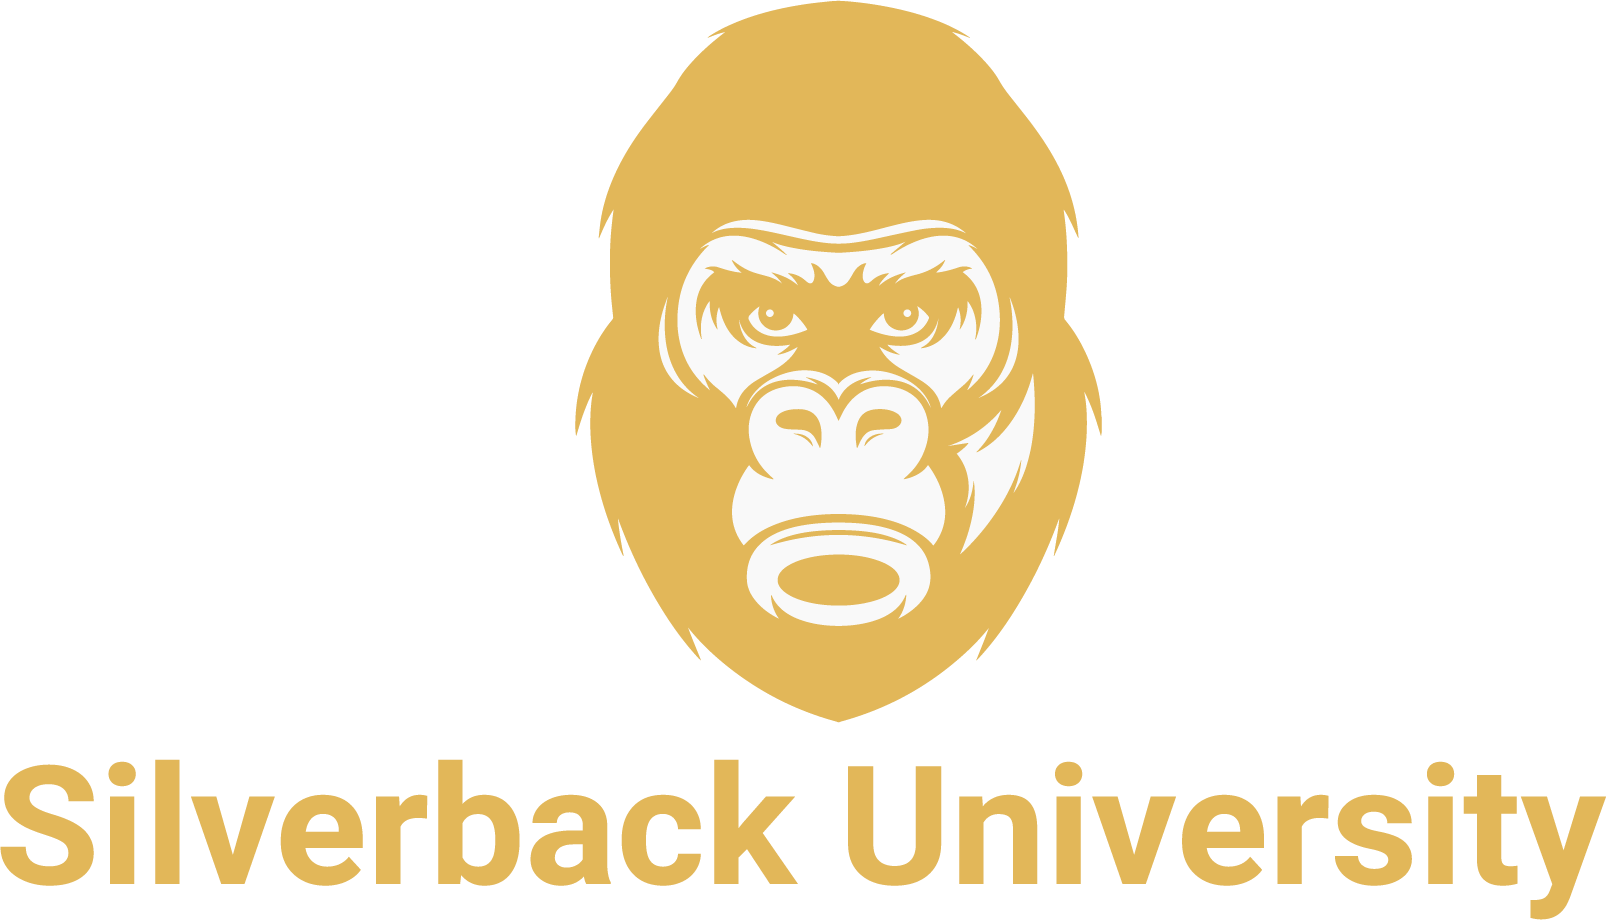 Silverback University